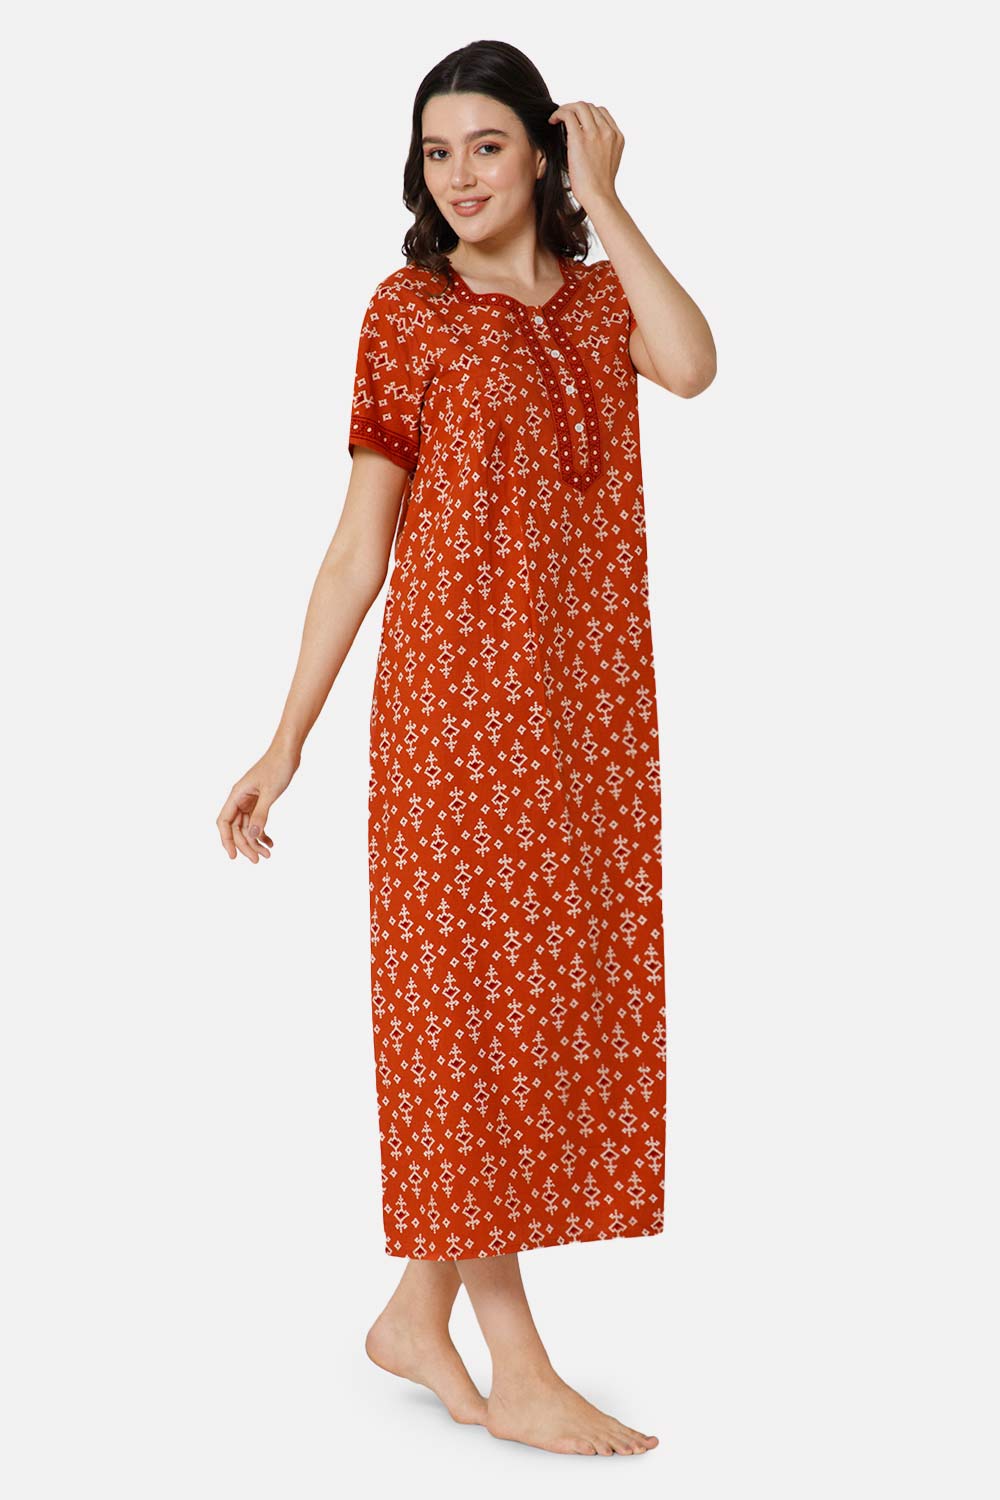 Naidu Hall A-line Front Open Women's Nighty Full Length Half Sleeve  - Orange - R135